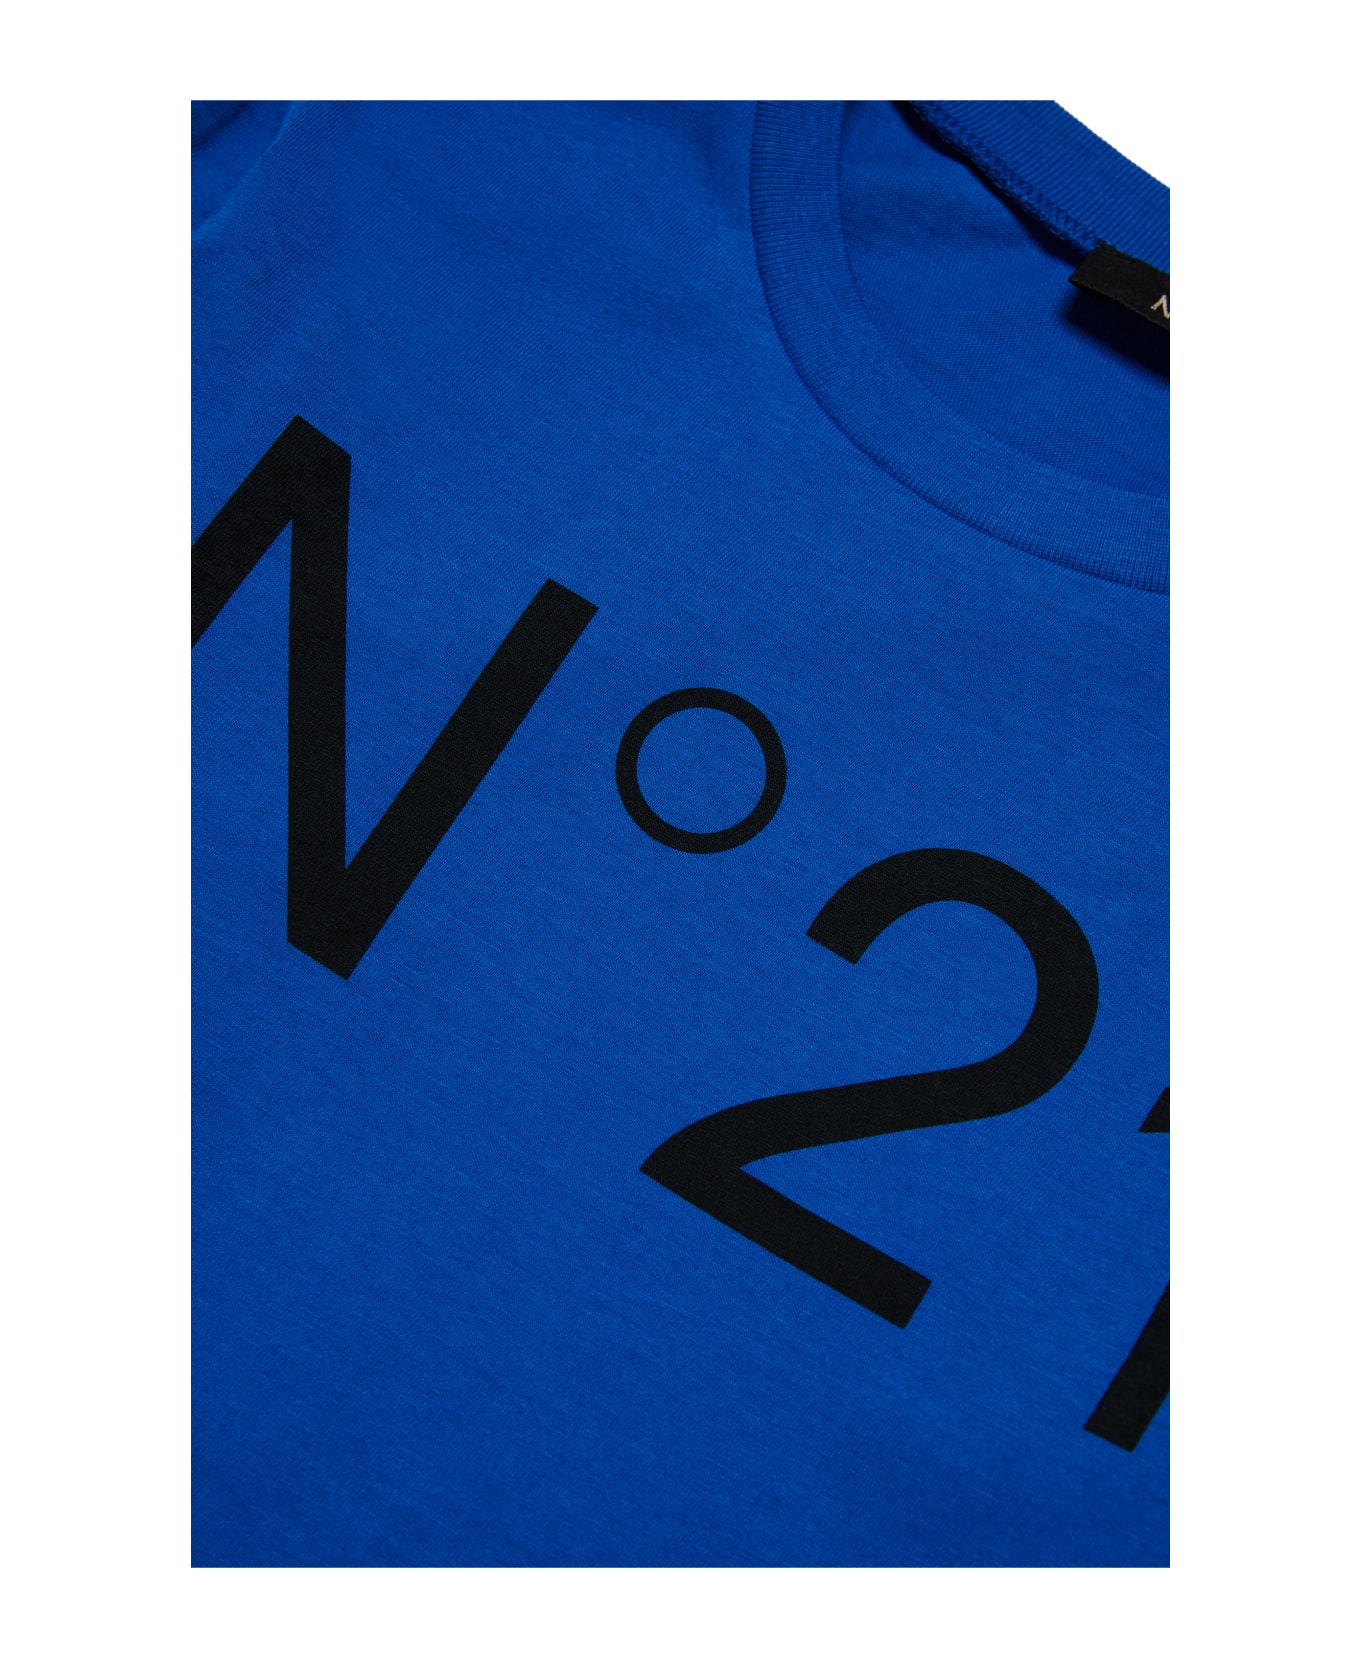 N.21 N21t195u T-shirt N°21 Crew-neck Jersey T-shirt With Logo Tシャツ ...